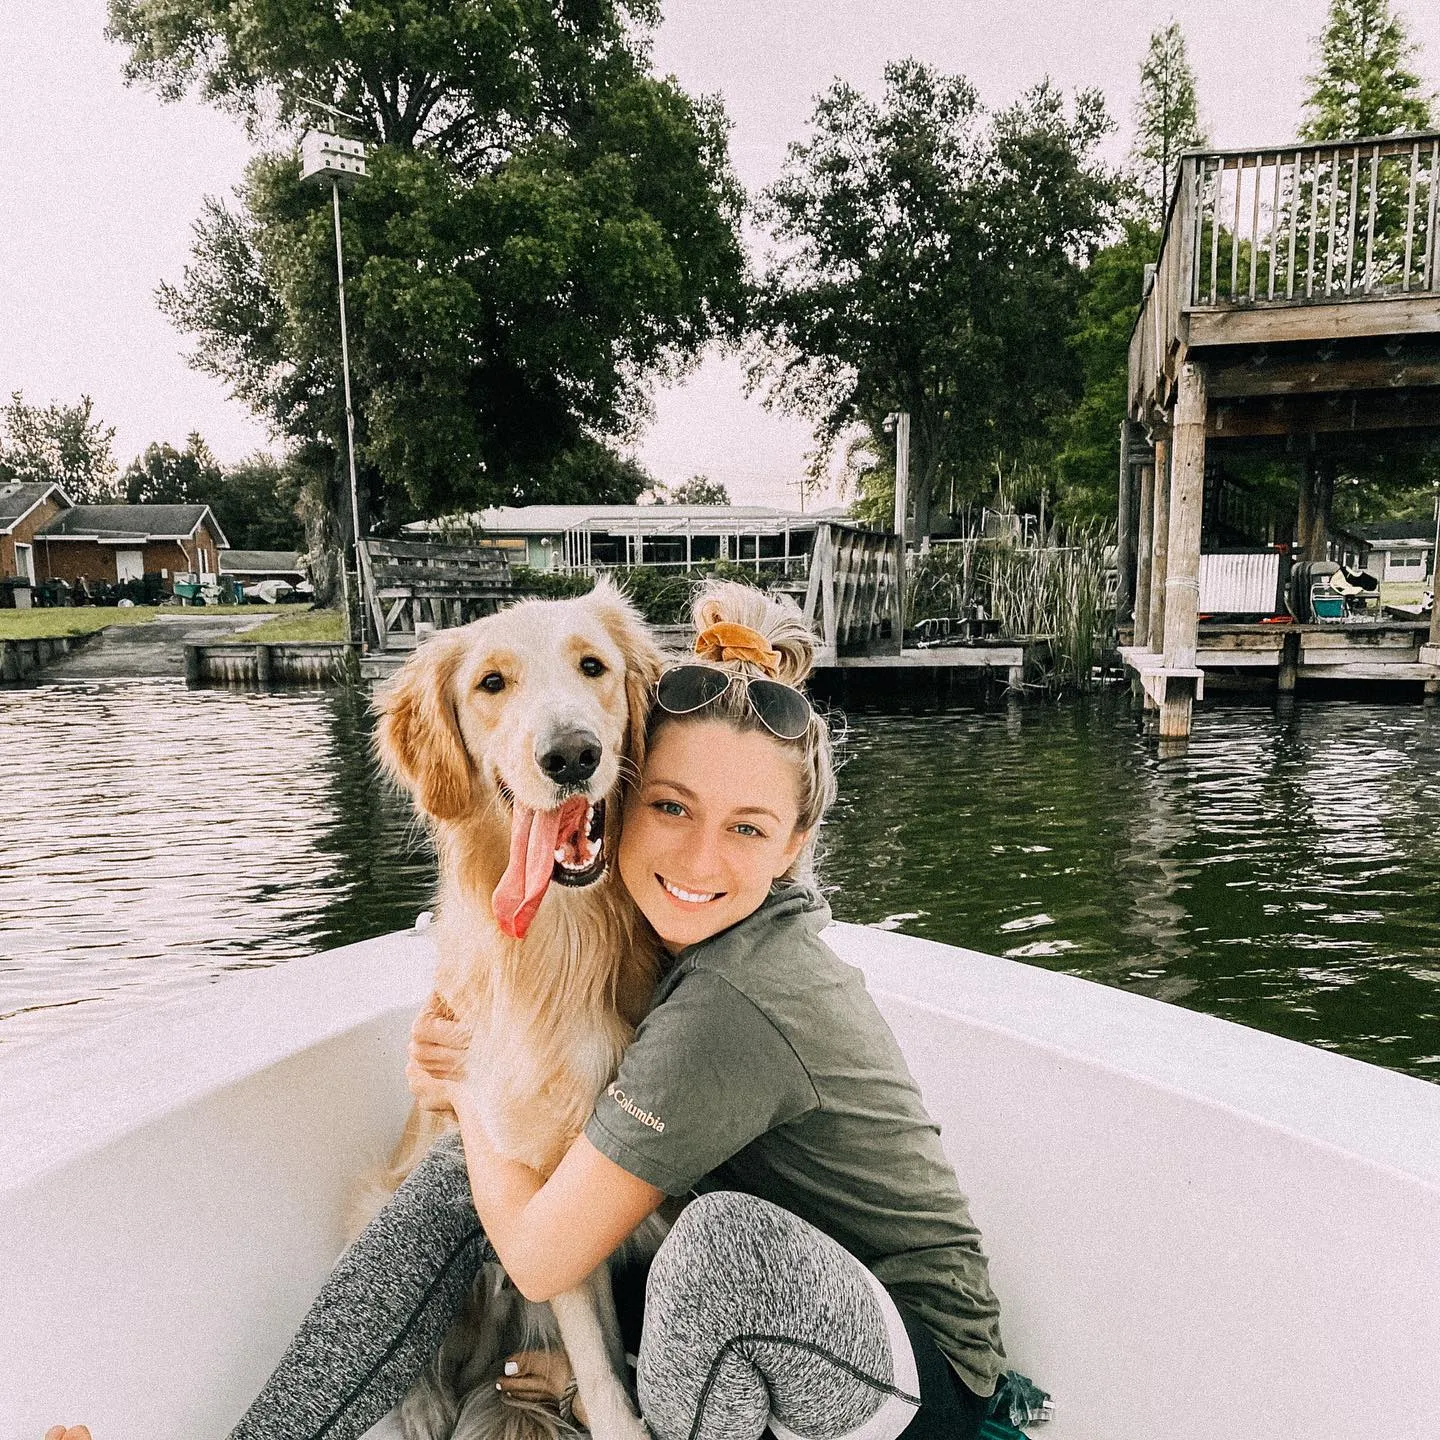 Tia Borso alongside her pet in a boat